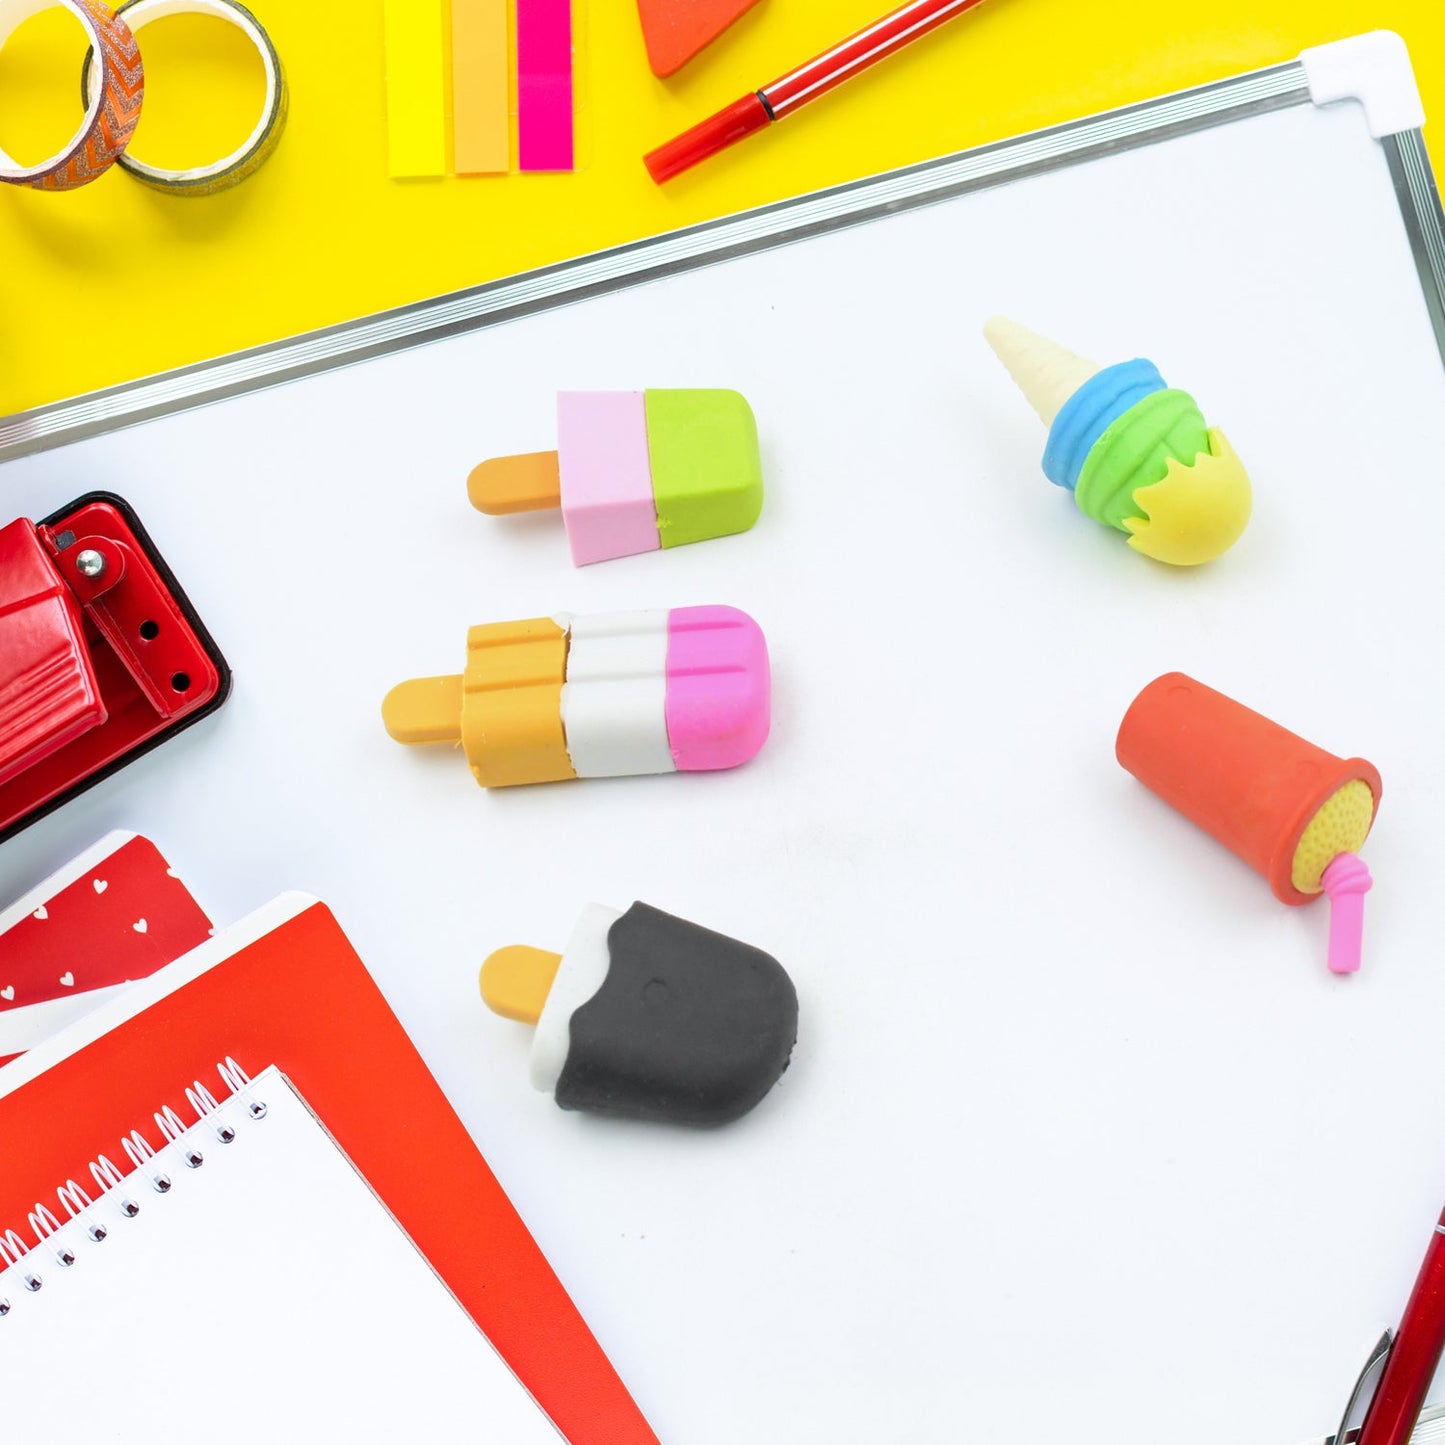 Stationary Kit Fancy & Stylish Colorful Erasers, Mini Eraser Creative Cute Novelty Eraser for Children Different Designs Eraser Set for Return Gift, Birthday Party, School Prize, Football & Icecream Set Eraser (9 pc & 5 Pc Set) - deal99.in